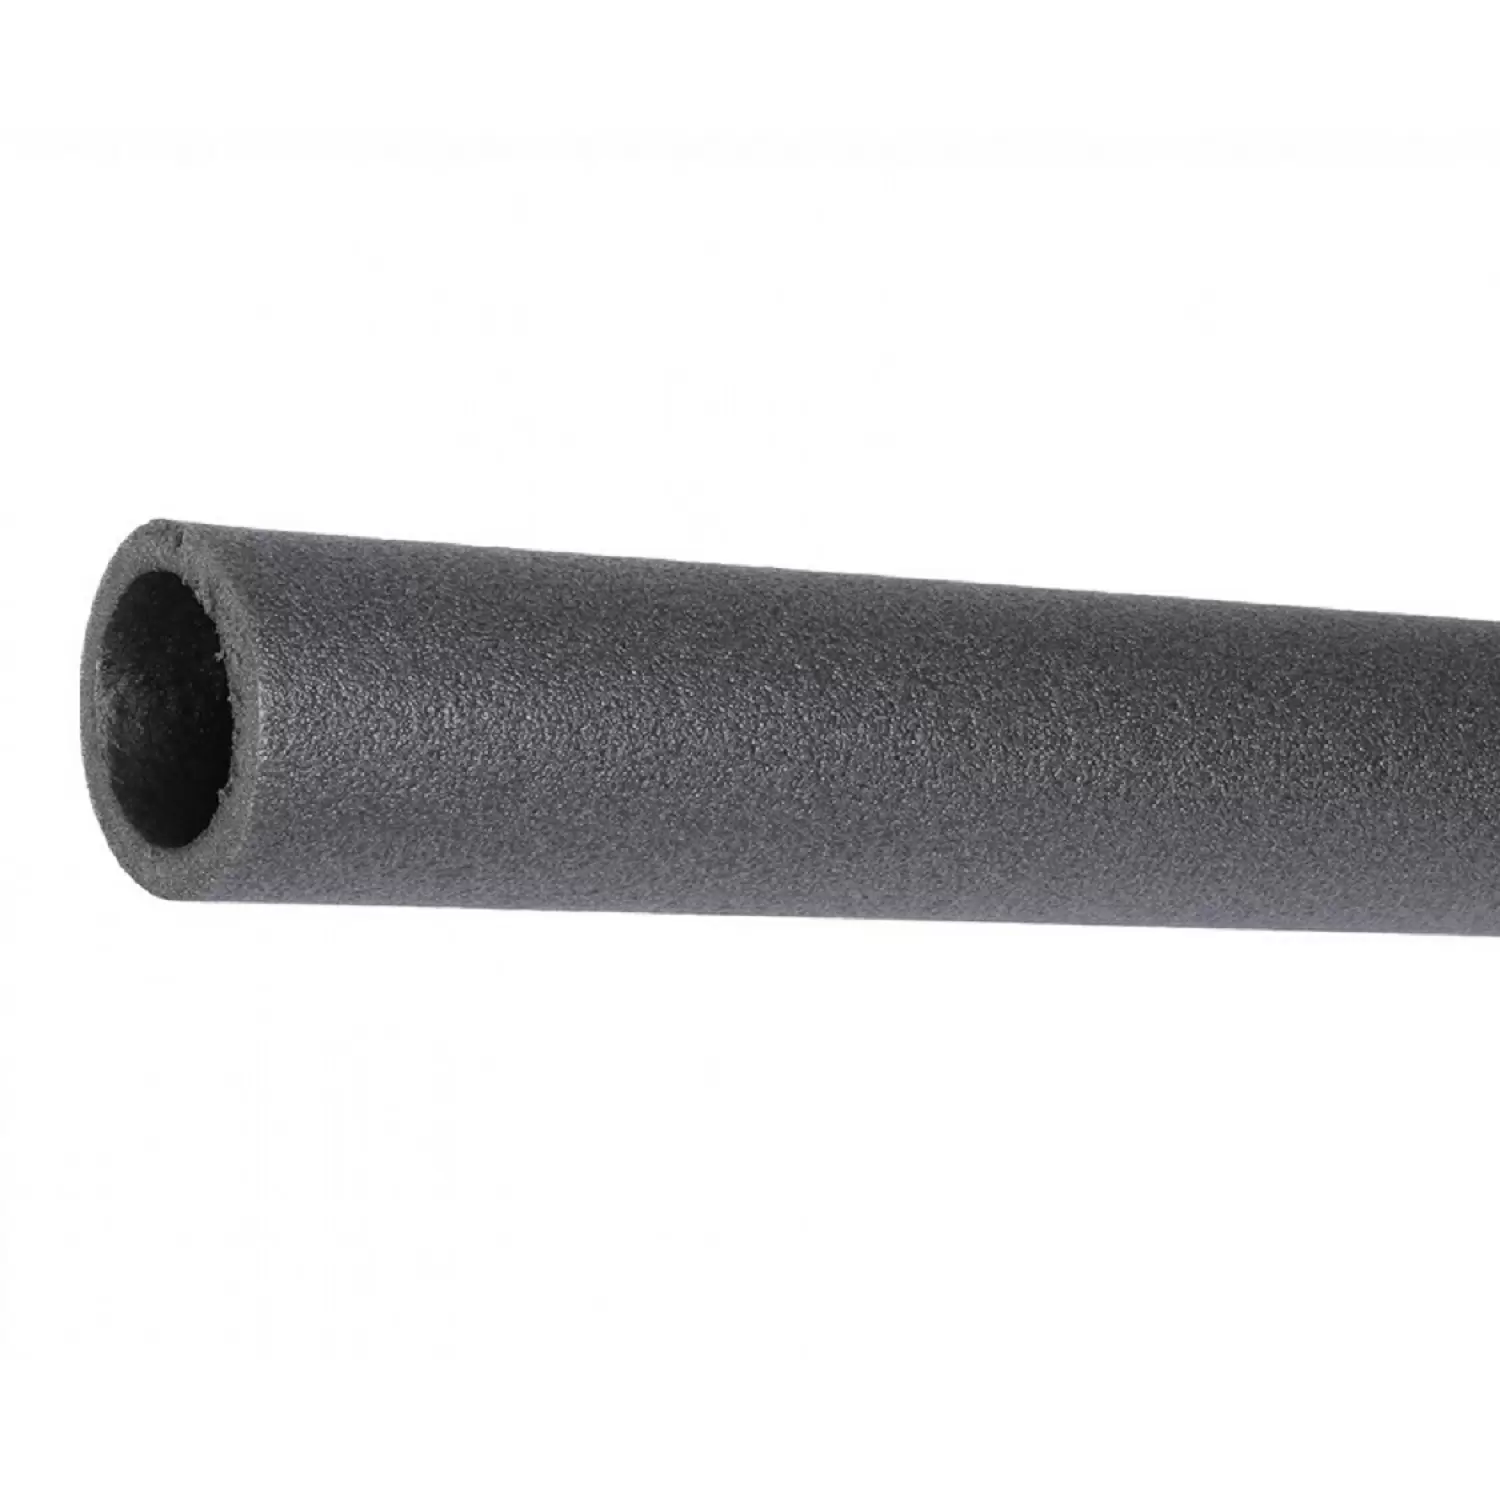 Теплоизоляция Энергофлекс супер 35/9 для труб диаметром 32 мм, трубка 2 м